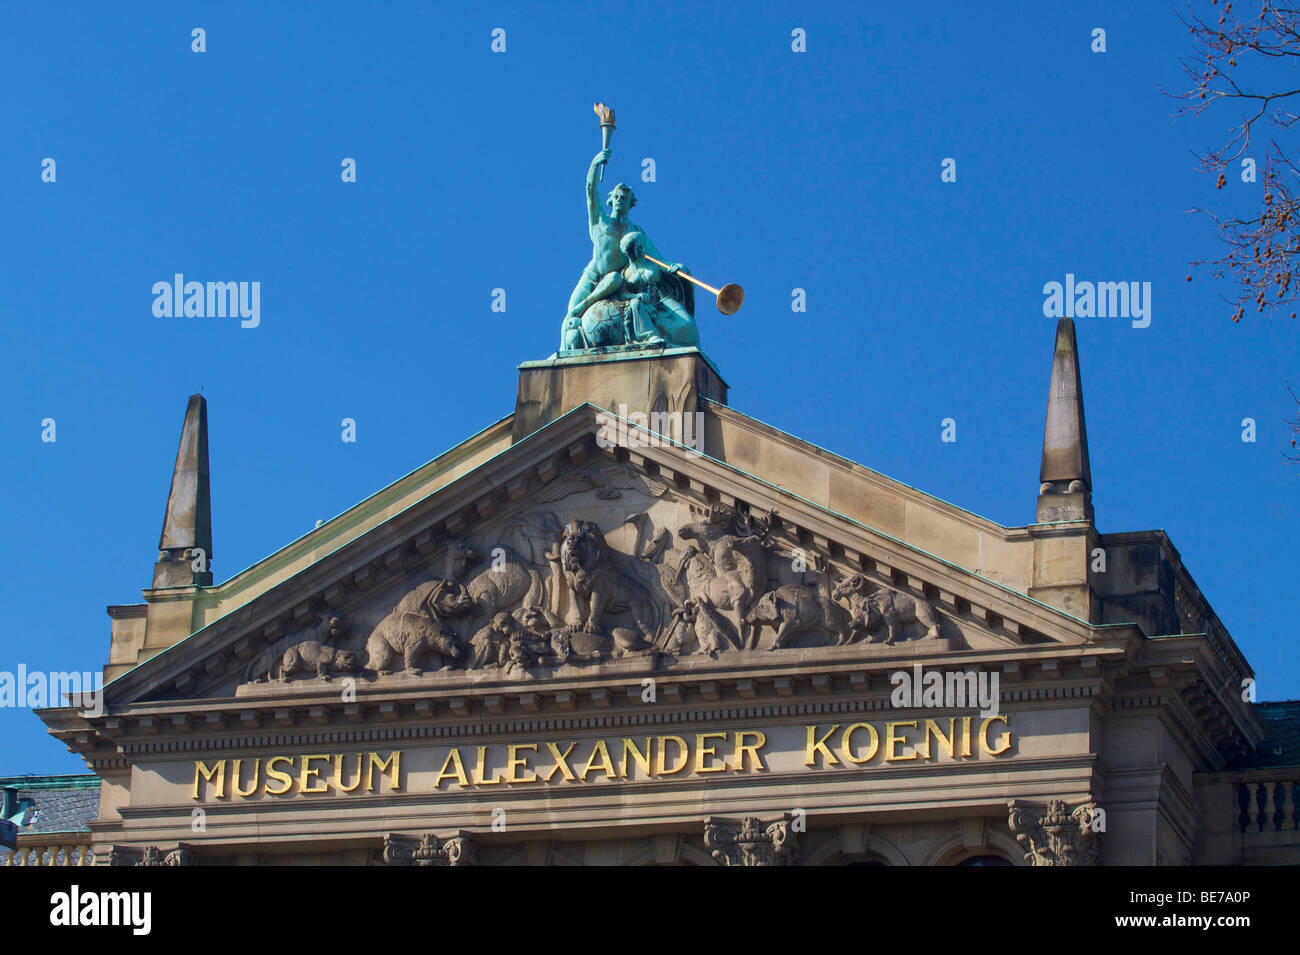 Alexander Koenig Museum, Zoological Research Museum, Bonn, North Rhine-Westphalia, Germany, Europe Stock Photo